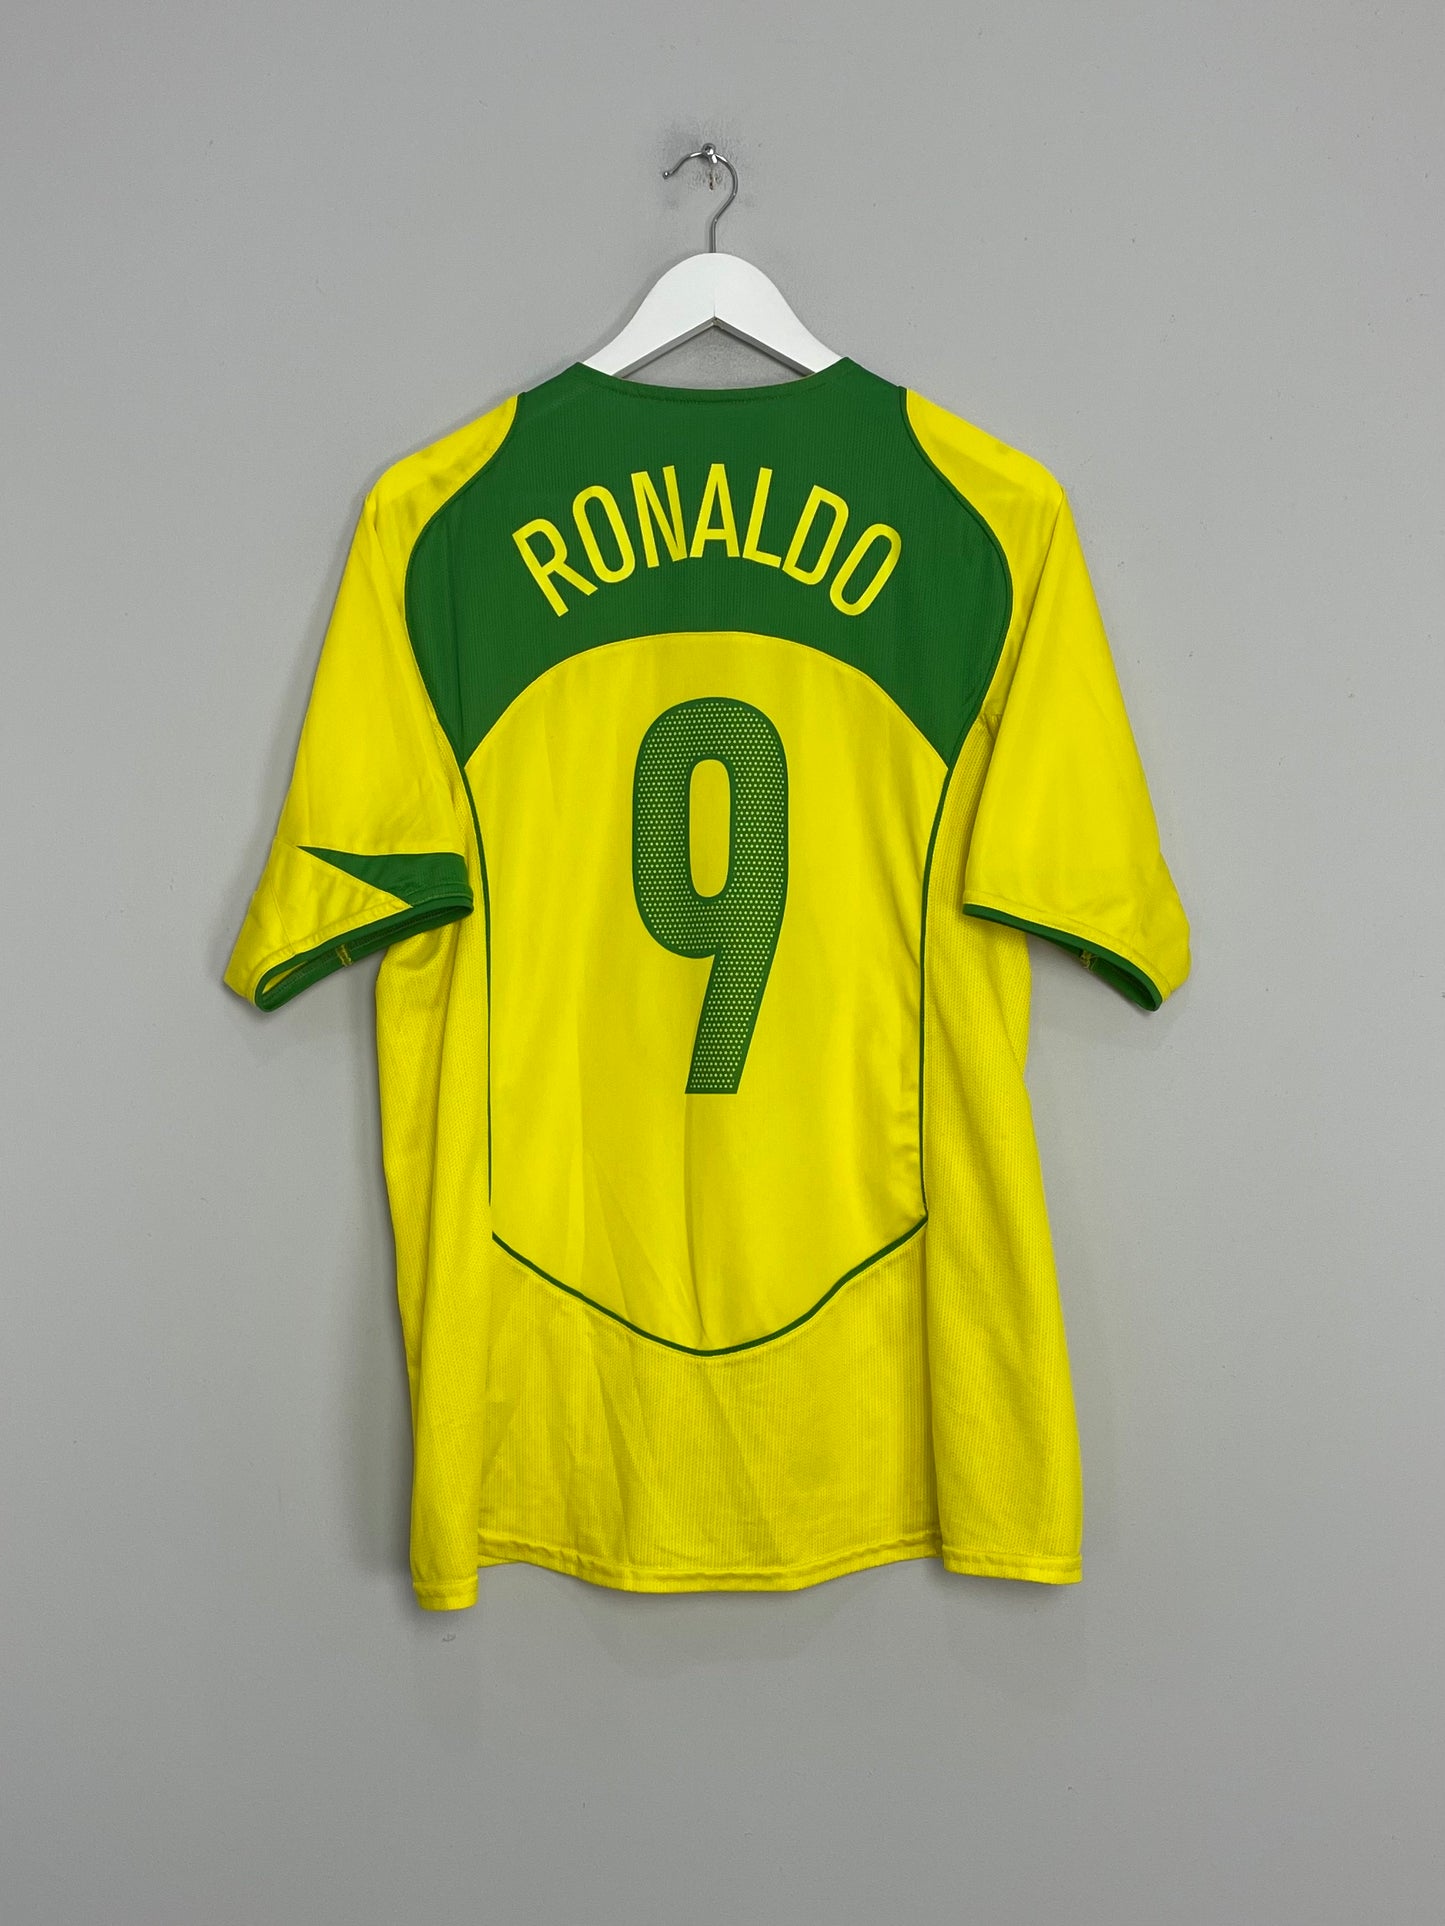 Image of the Brazil Ronaldo shirt from the 2004/06 season